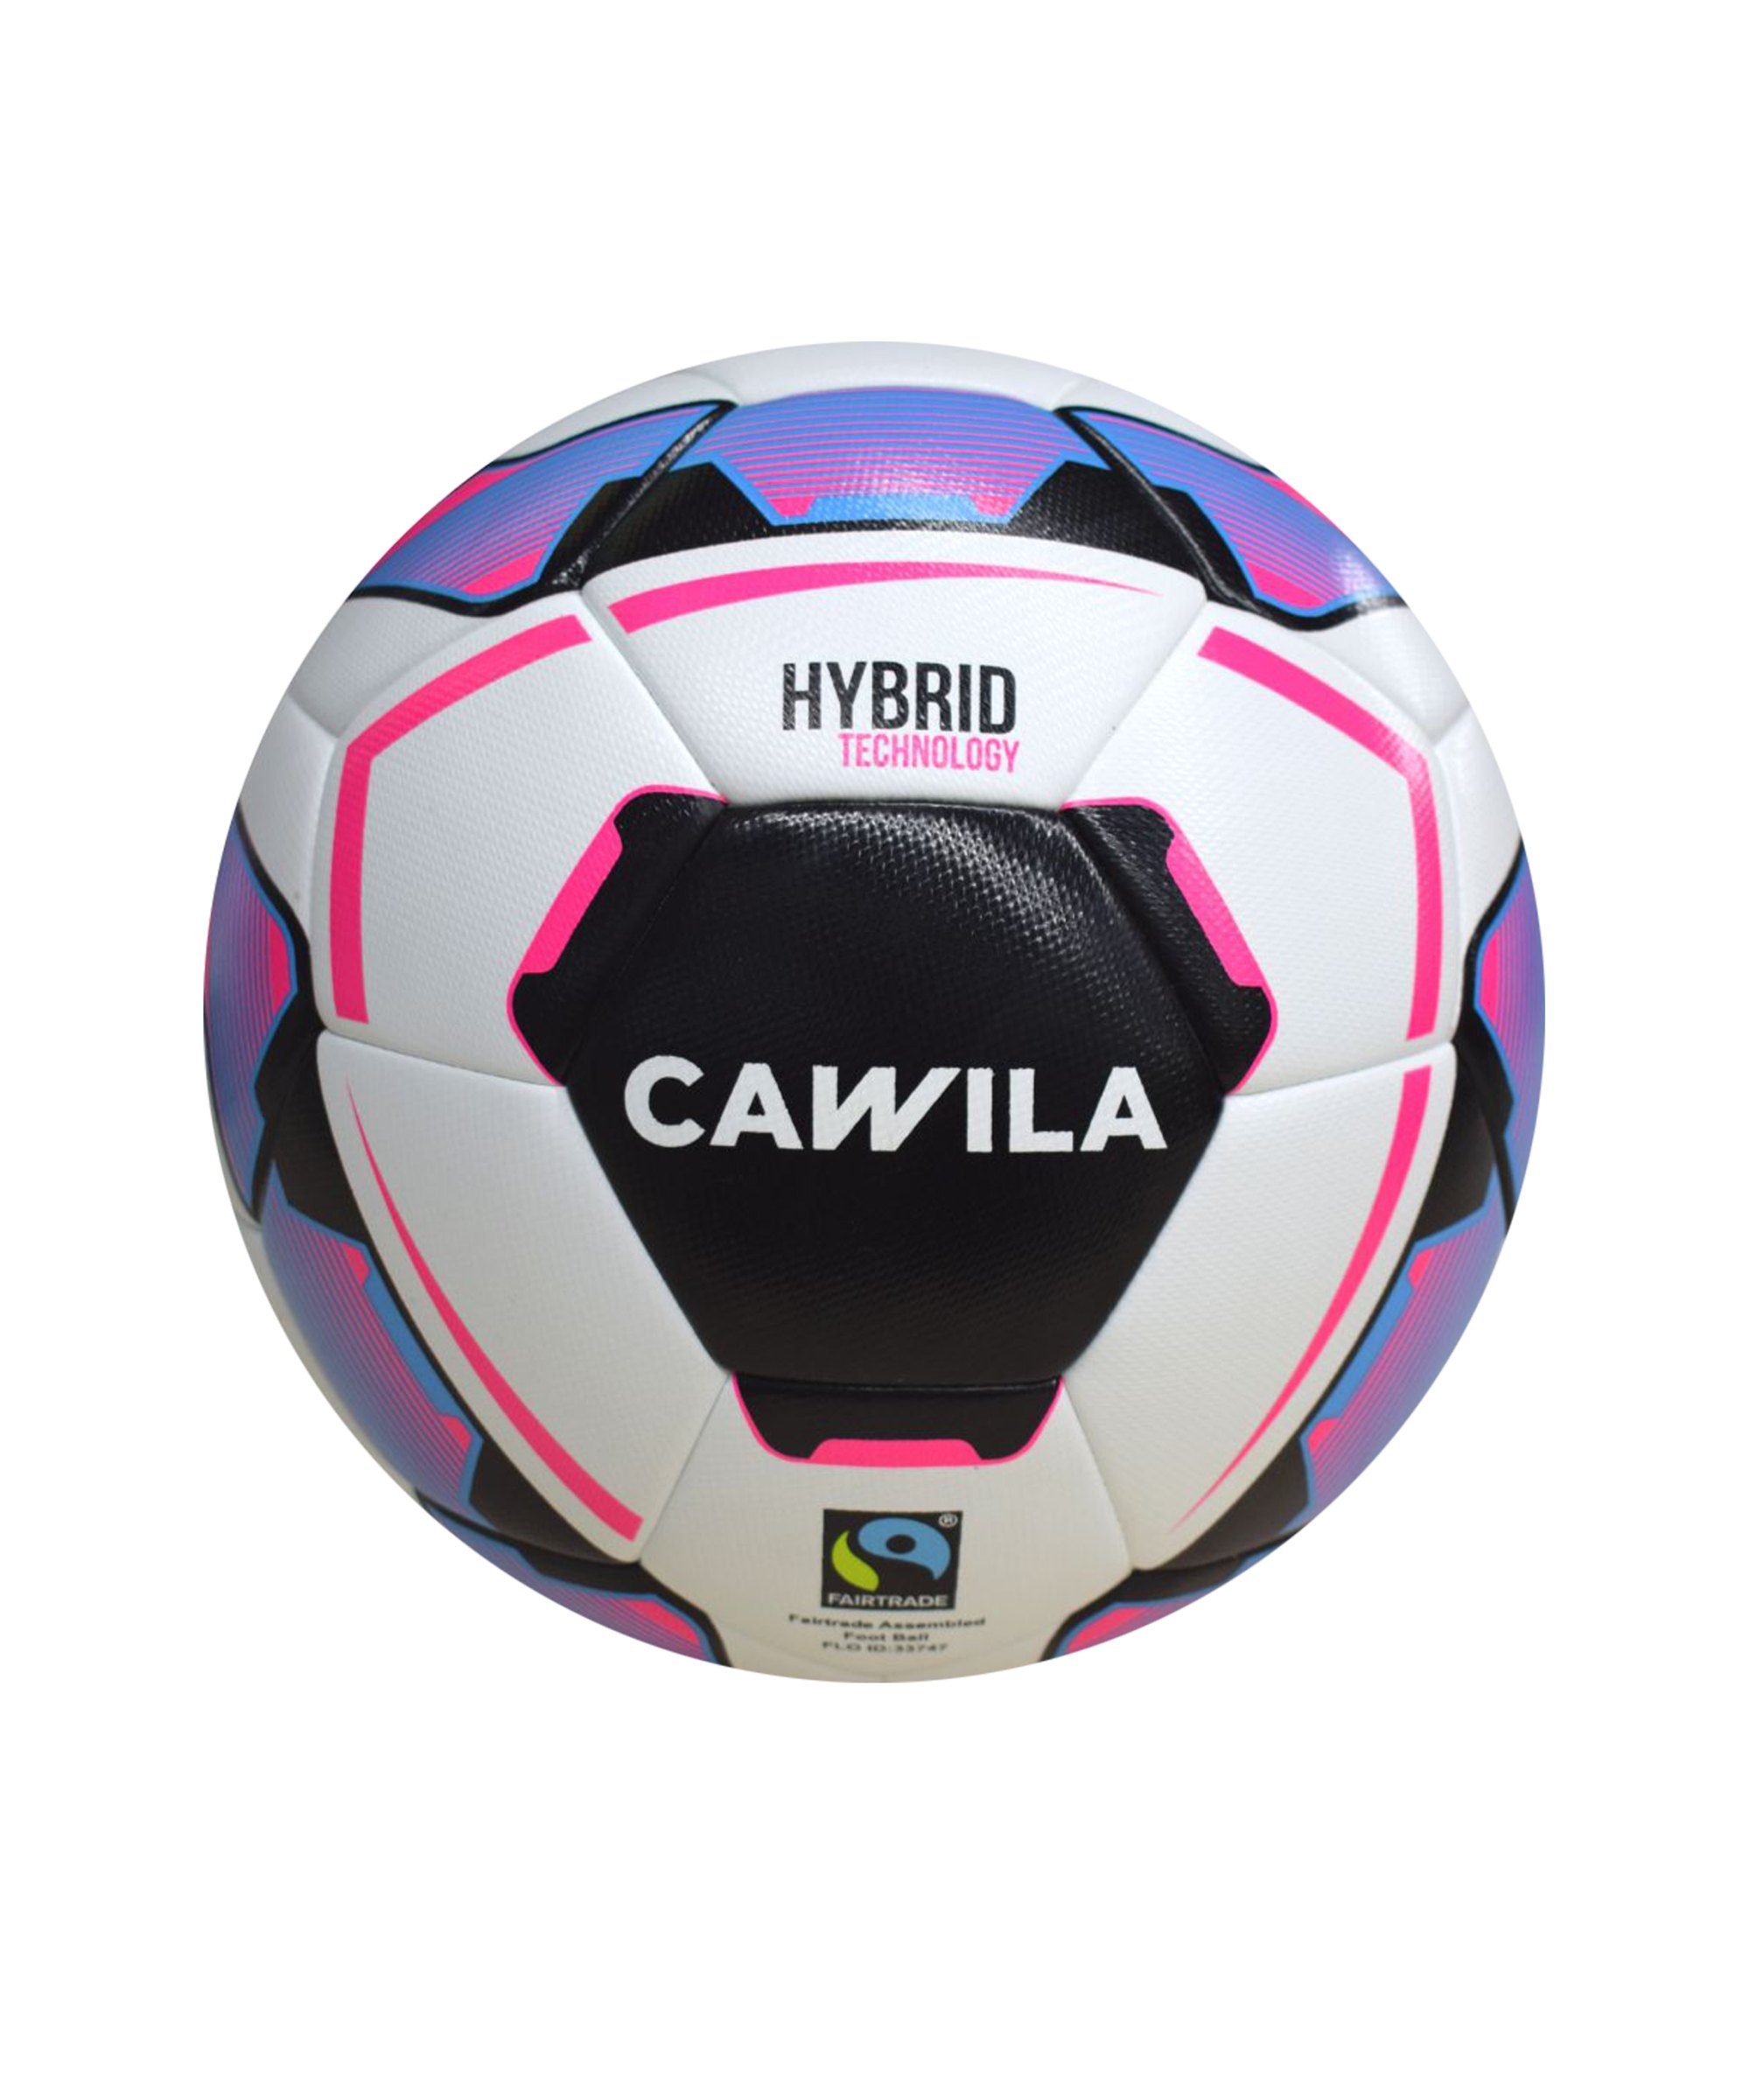 Cawila MISSION HYBRID LITE Fairtrade 350g Trainingsball Gr. 5 - weiss